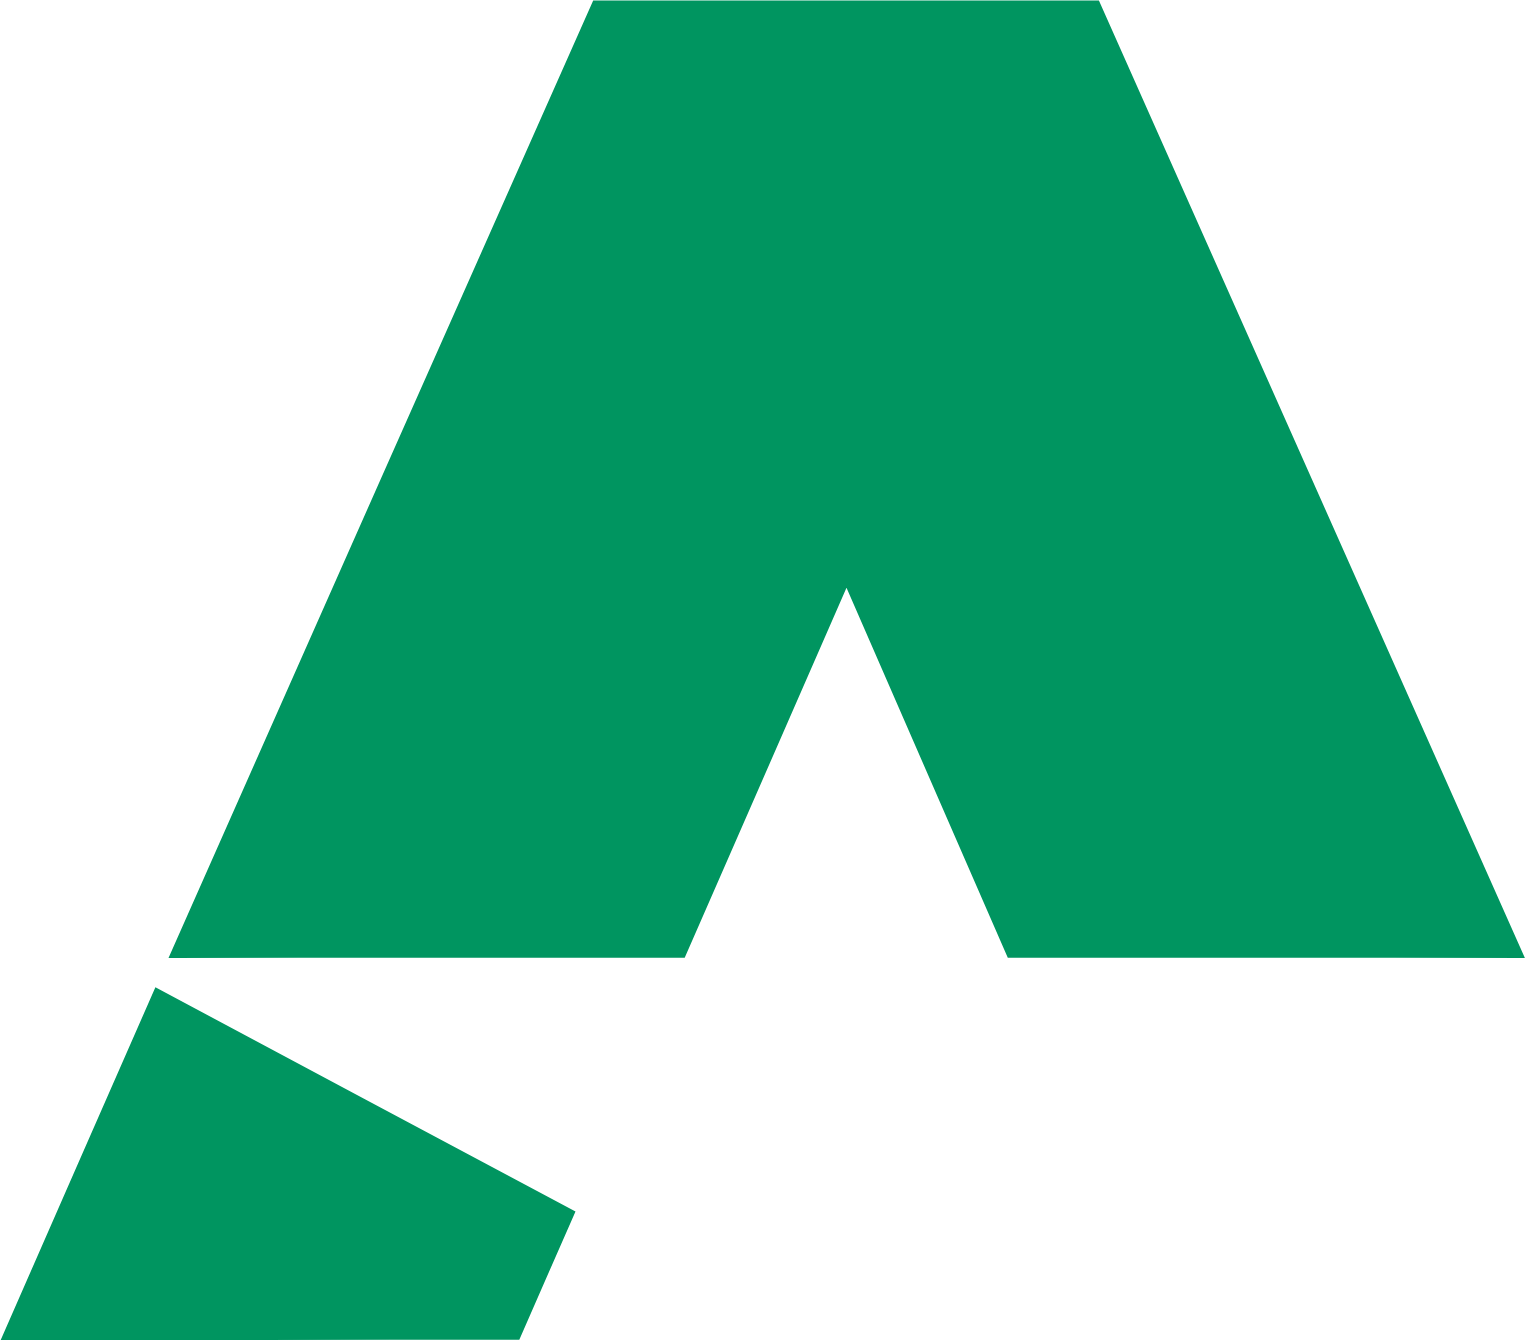 Alpha Metallurgical Resources logo (transparent PNG)